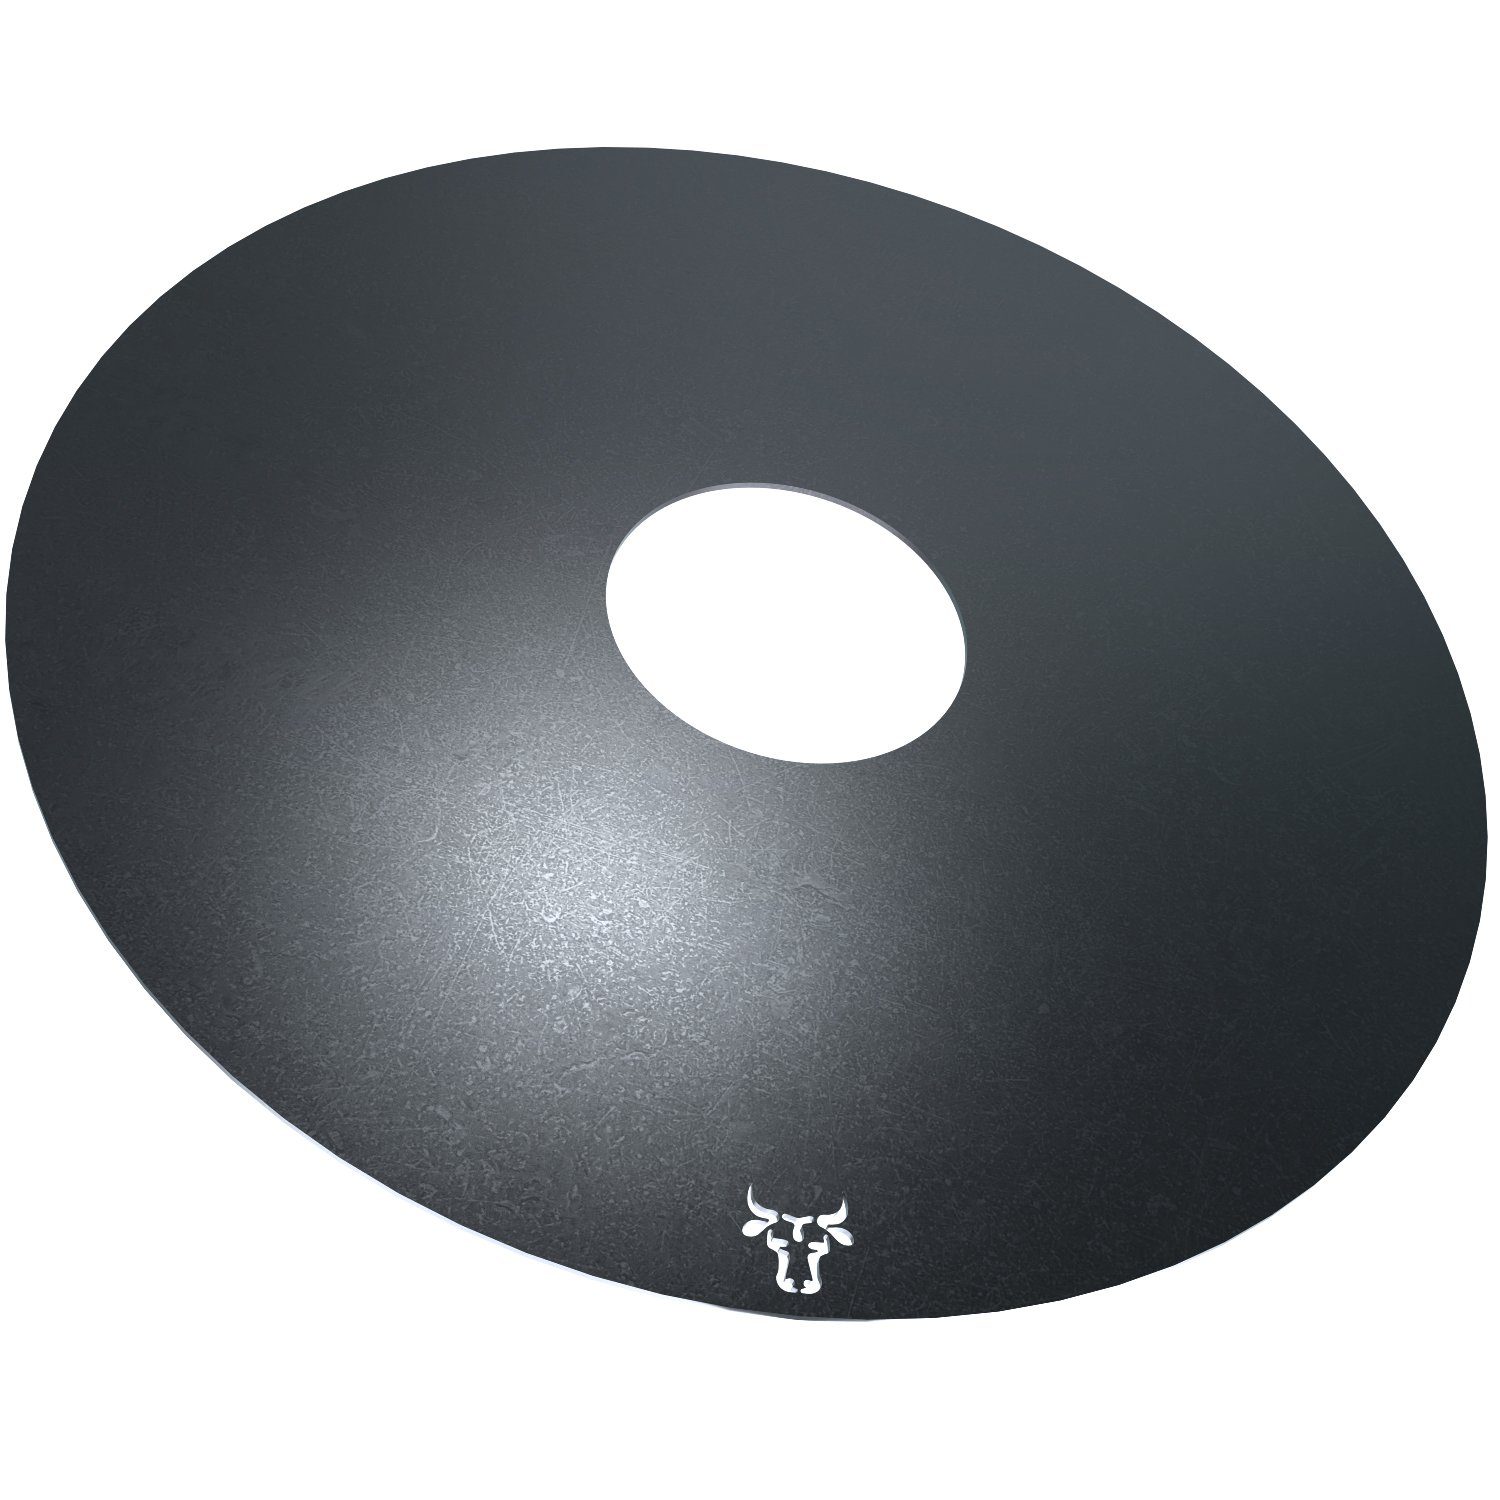 80cm Grillplatte Plancha GR01-80 Grillring tuning-art BBQ-Platte für Kugelgrill Feuerplatte